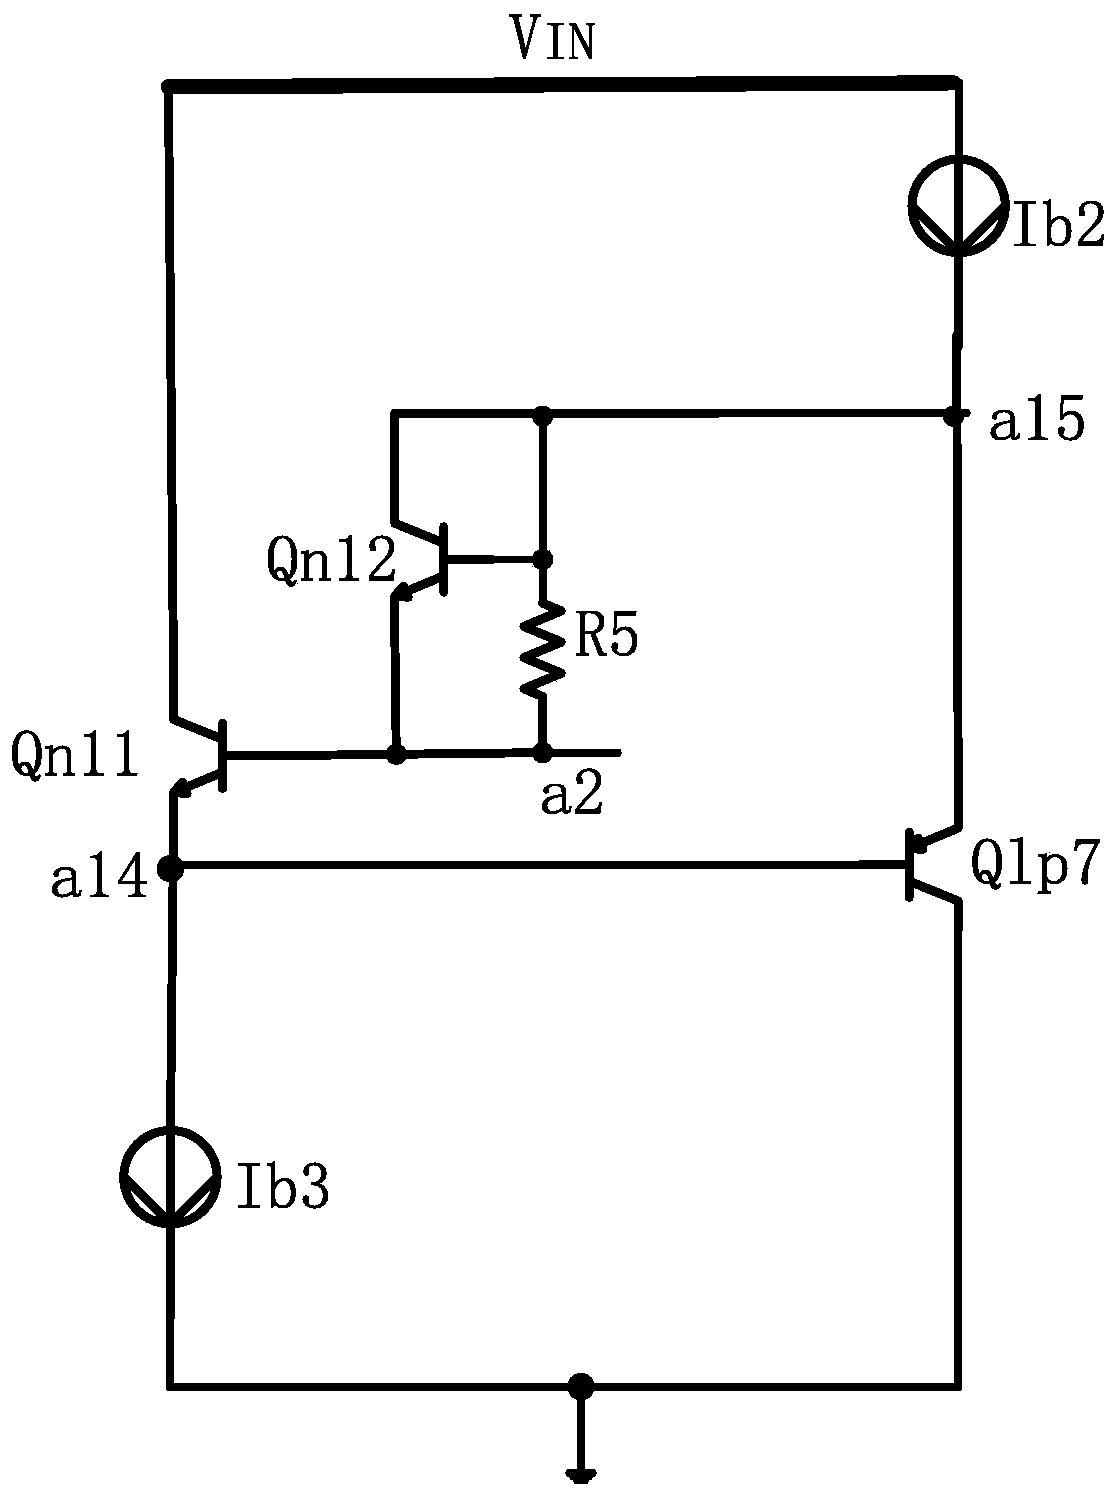 A bipolar anti-radiation 5a low-voltage broadband linear regulator